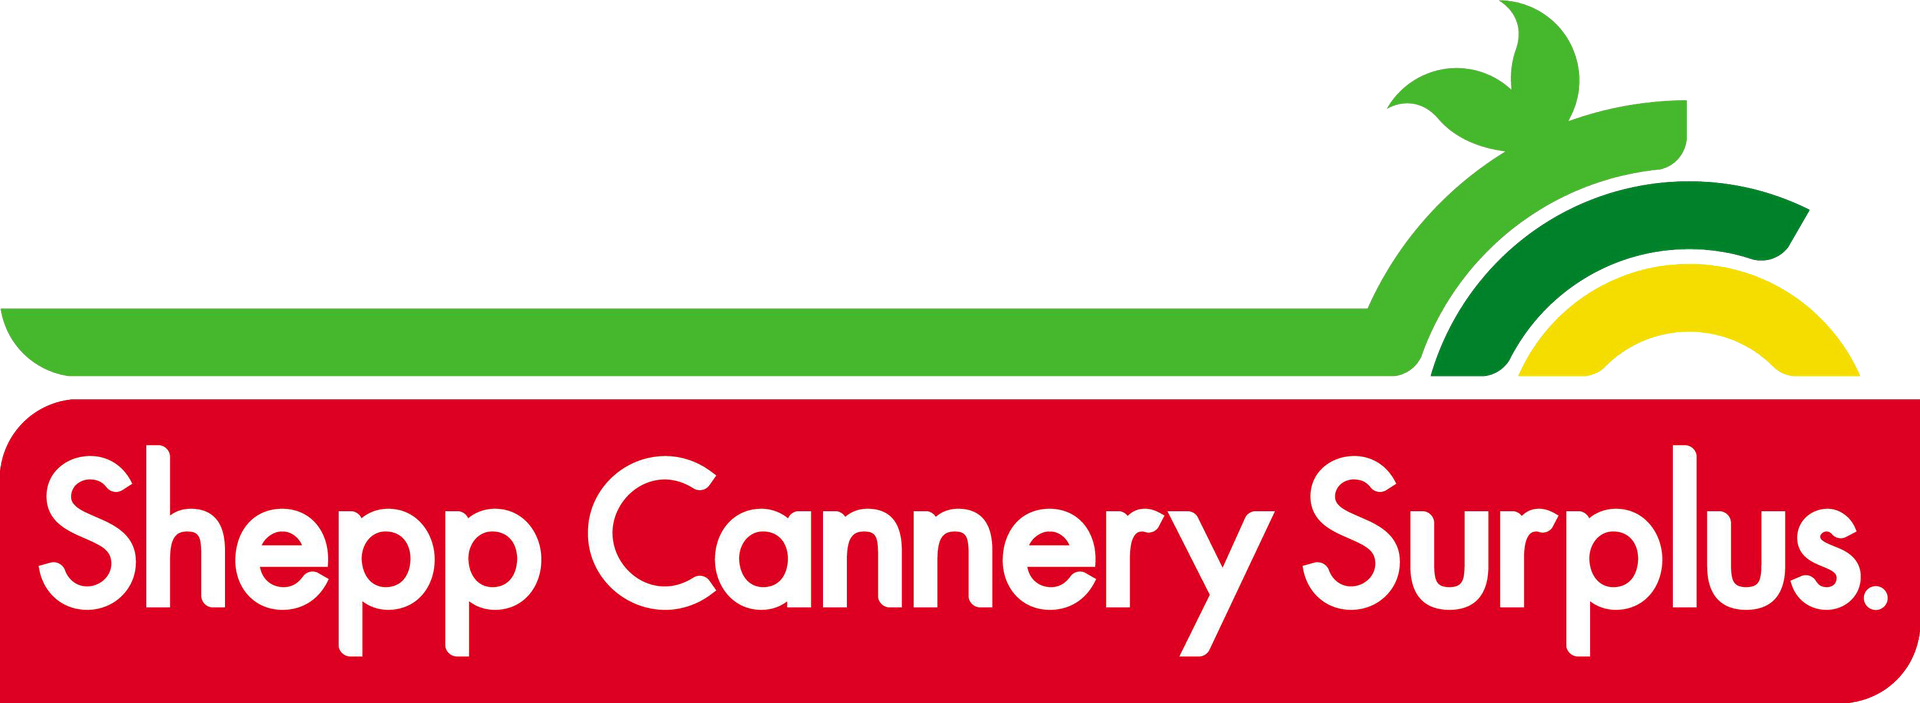 Shepp Cannery Surplus: Discount Groceries in Ballarat